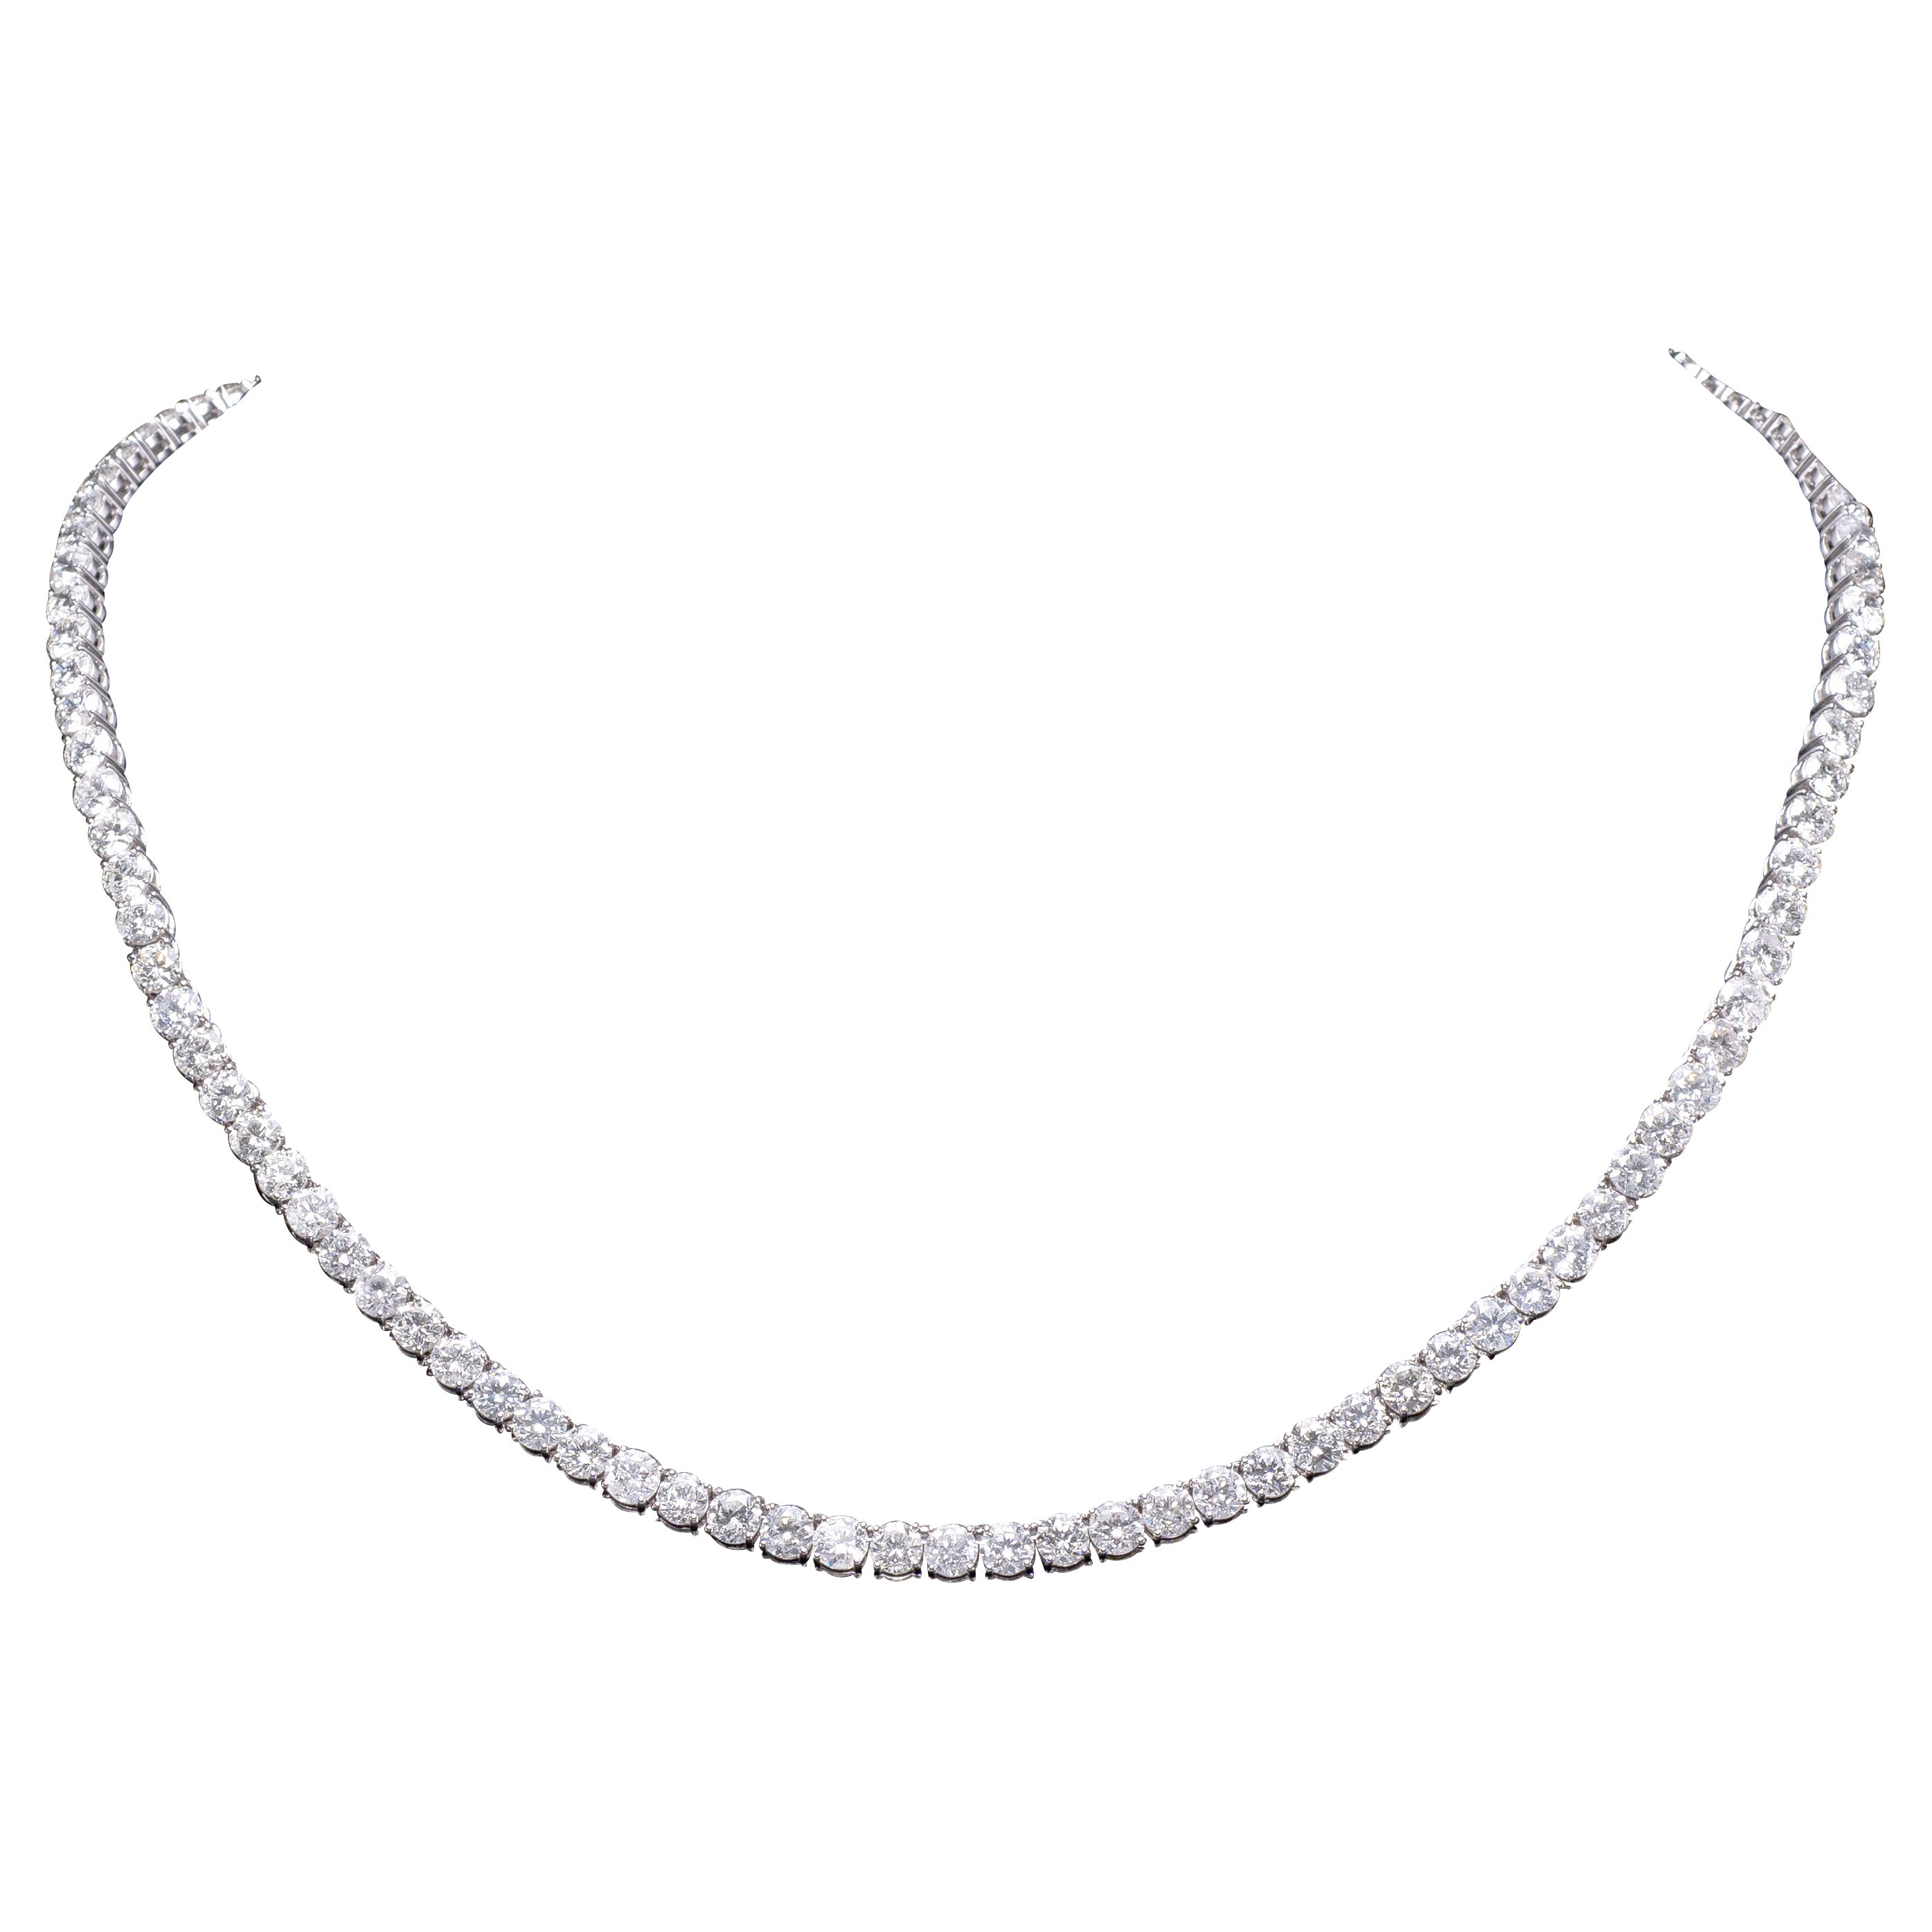 45.0 Carat Round Brilliant White Diamond Necklace in 18K White Gold